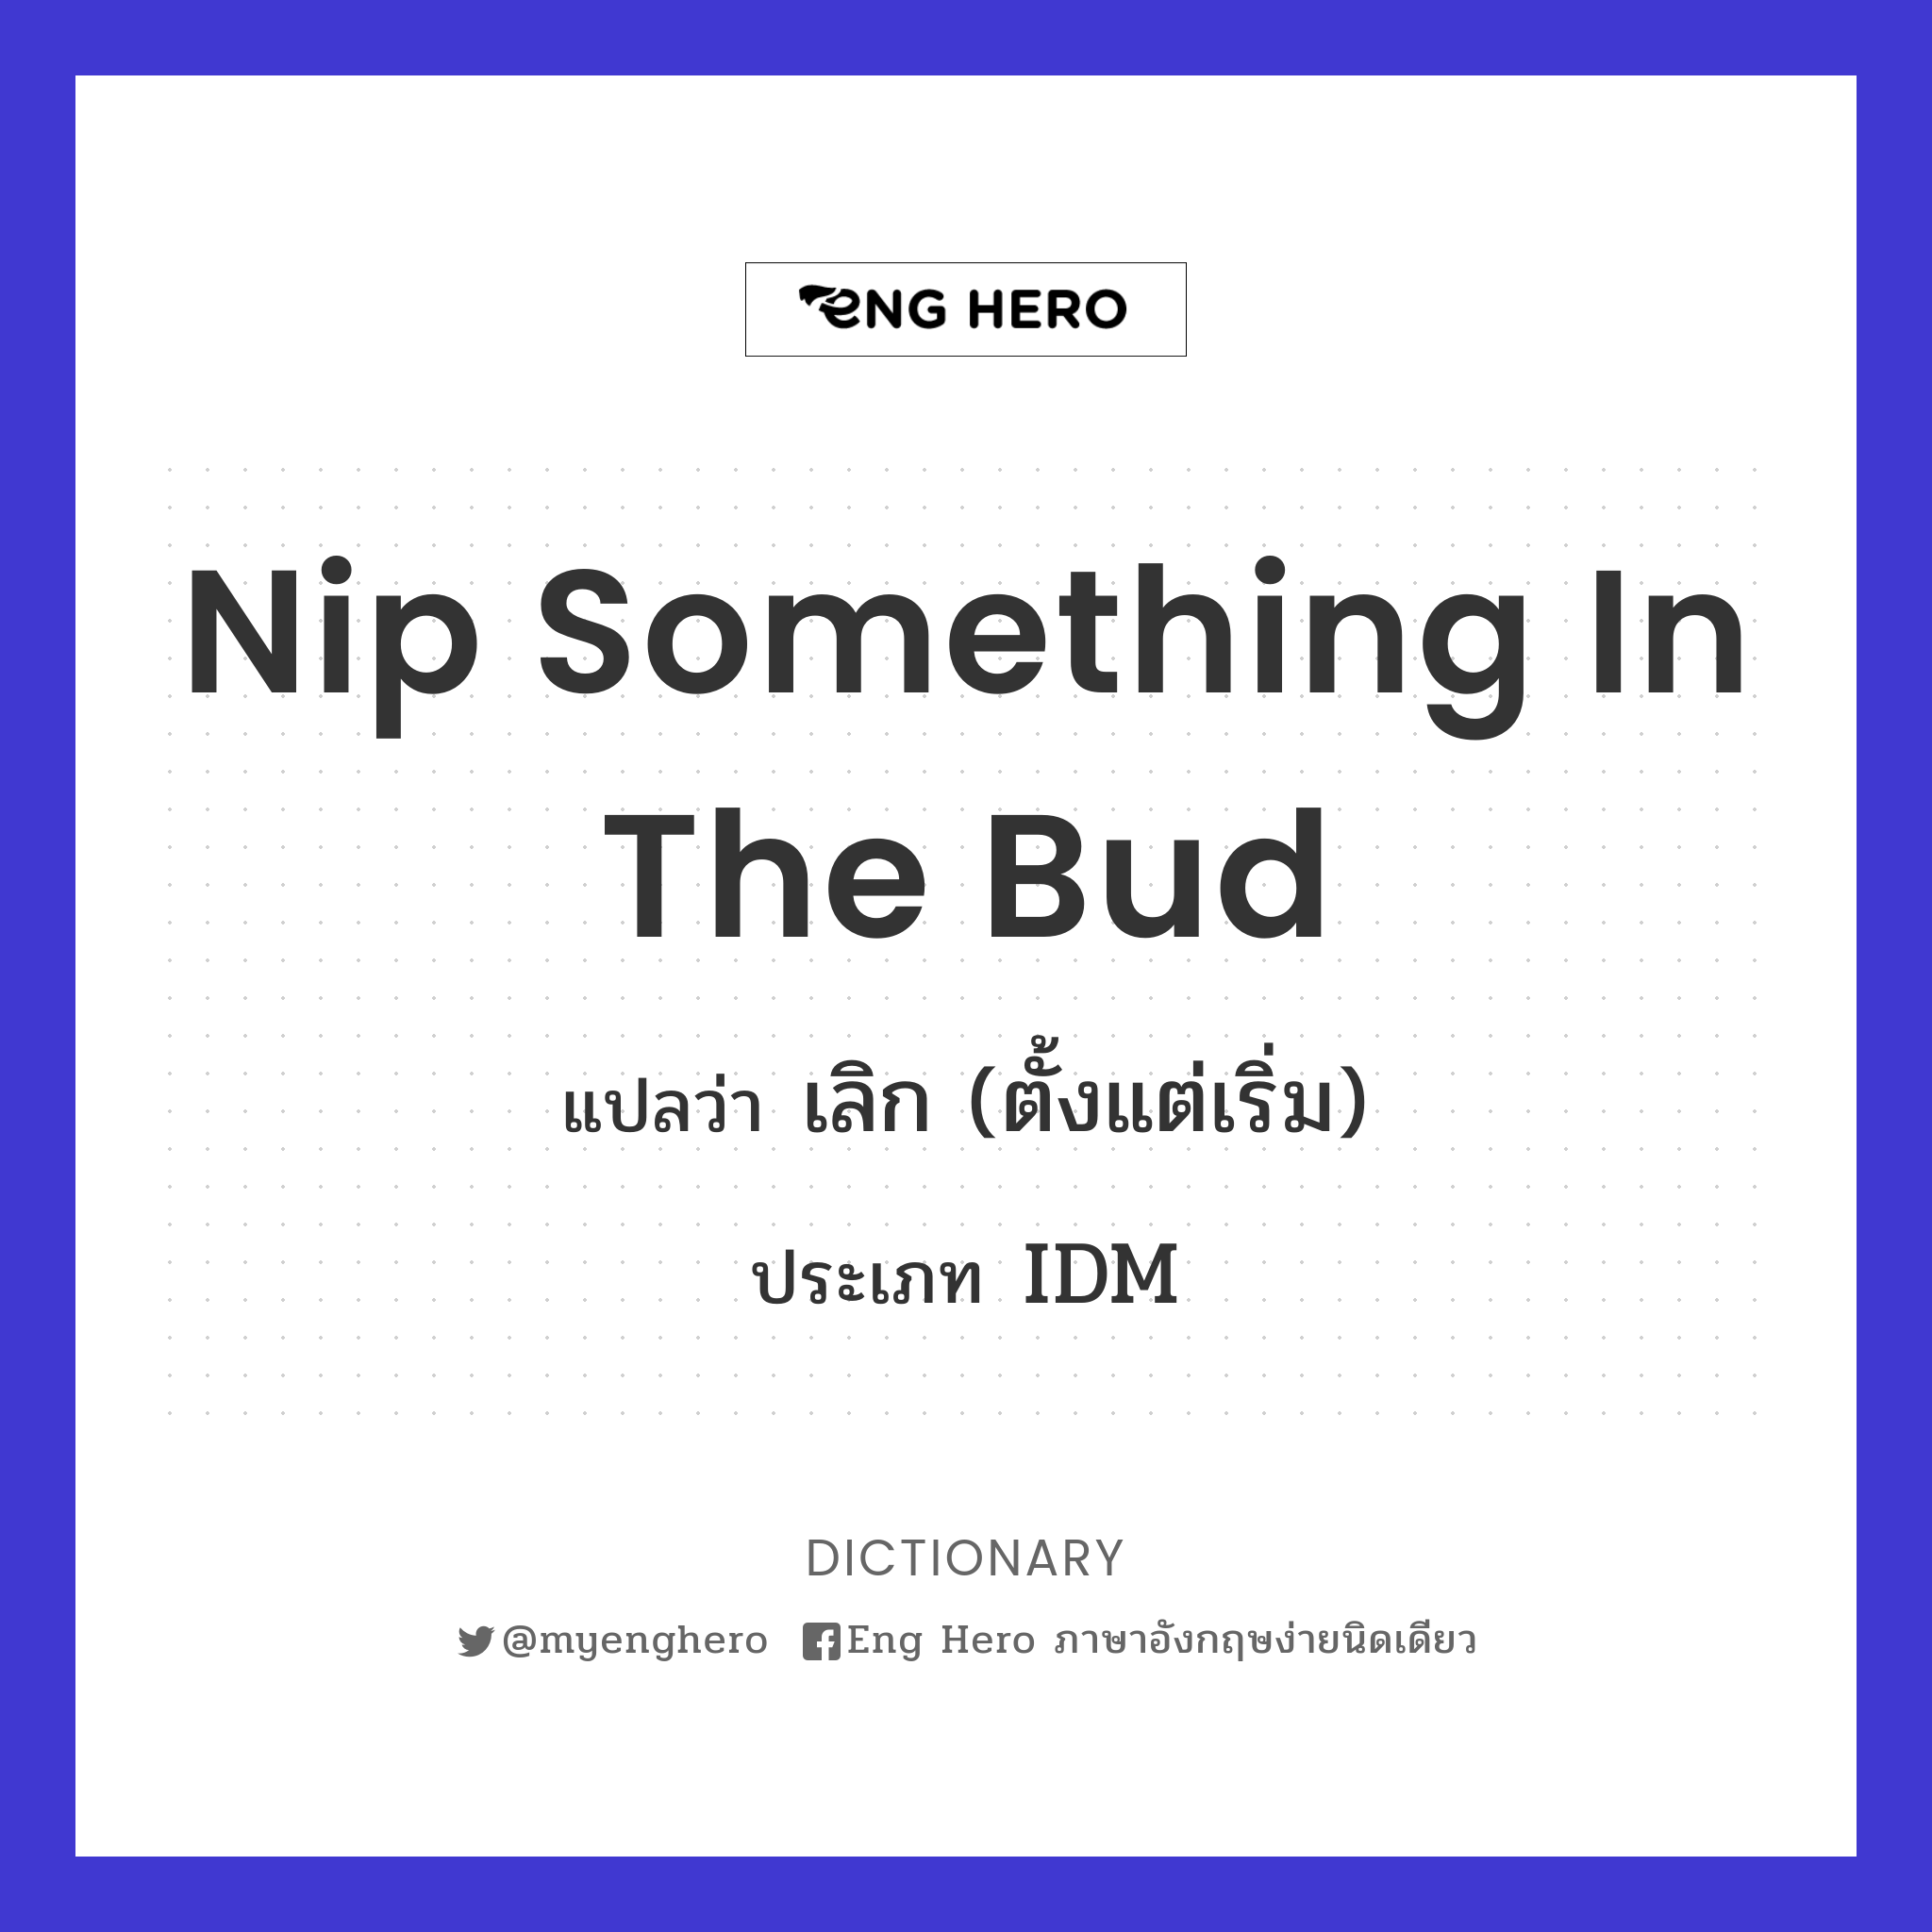 nip something in the bud